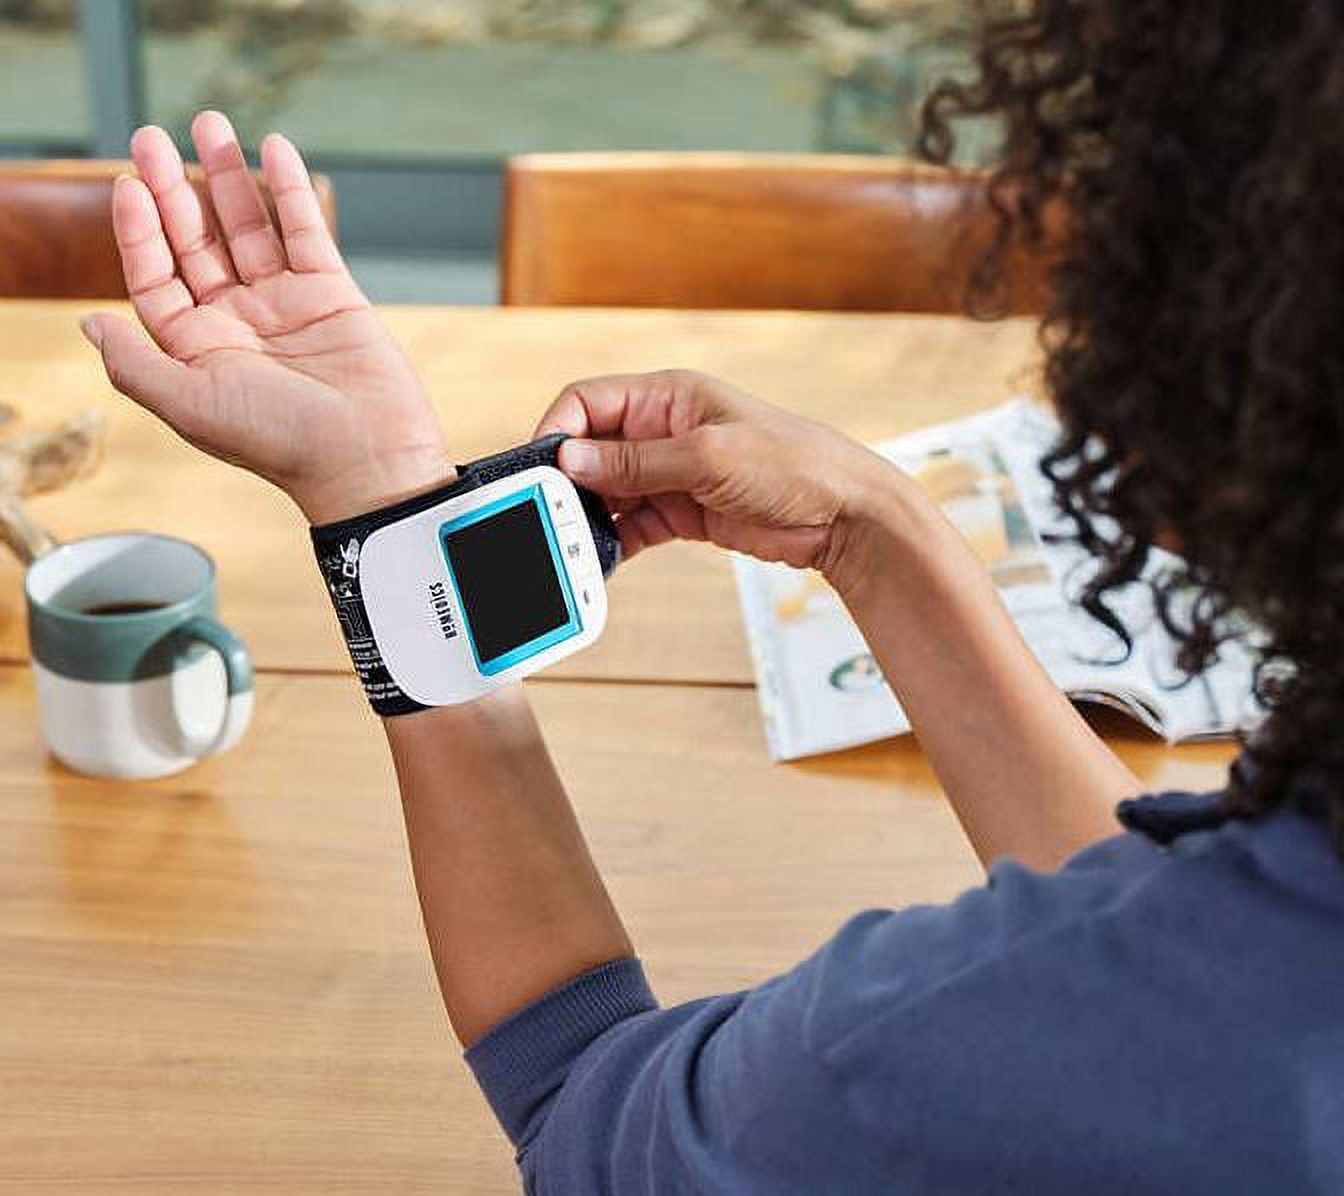 HoMedics Blood Pressure Wrist Monitor - Automatic Wireless BP Cuff with  Smart Measure Technology